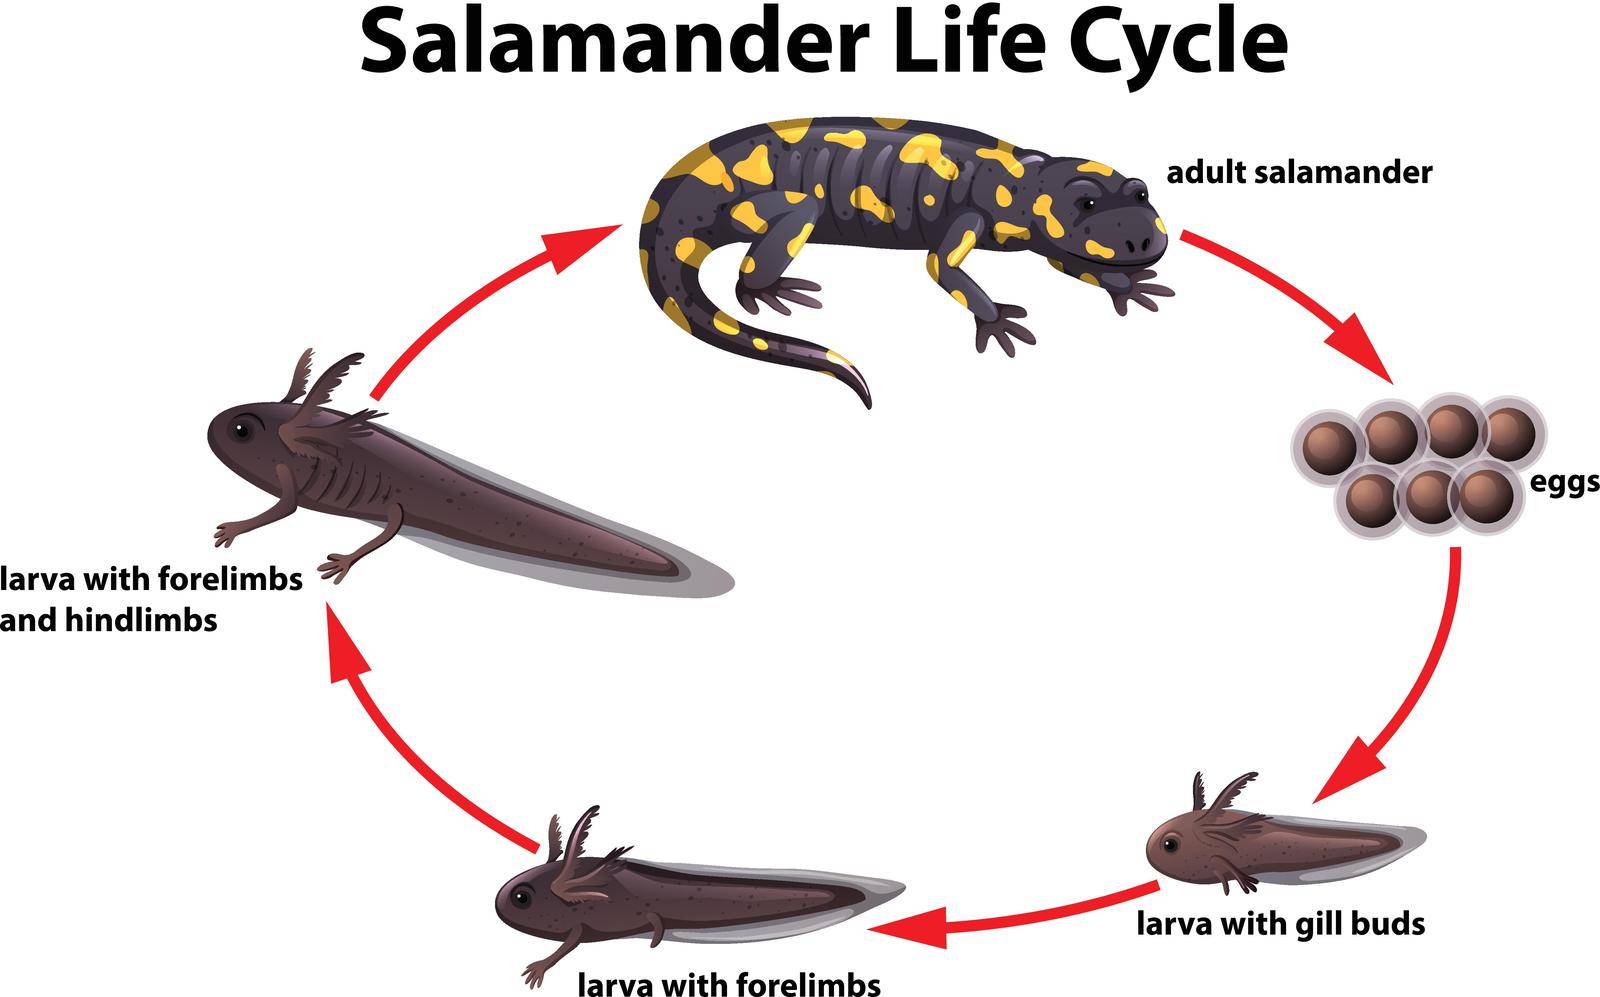 Salamander life cycle concept illustration